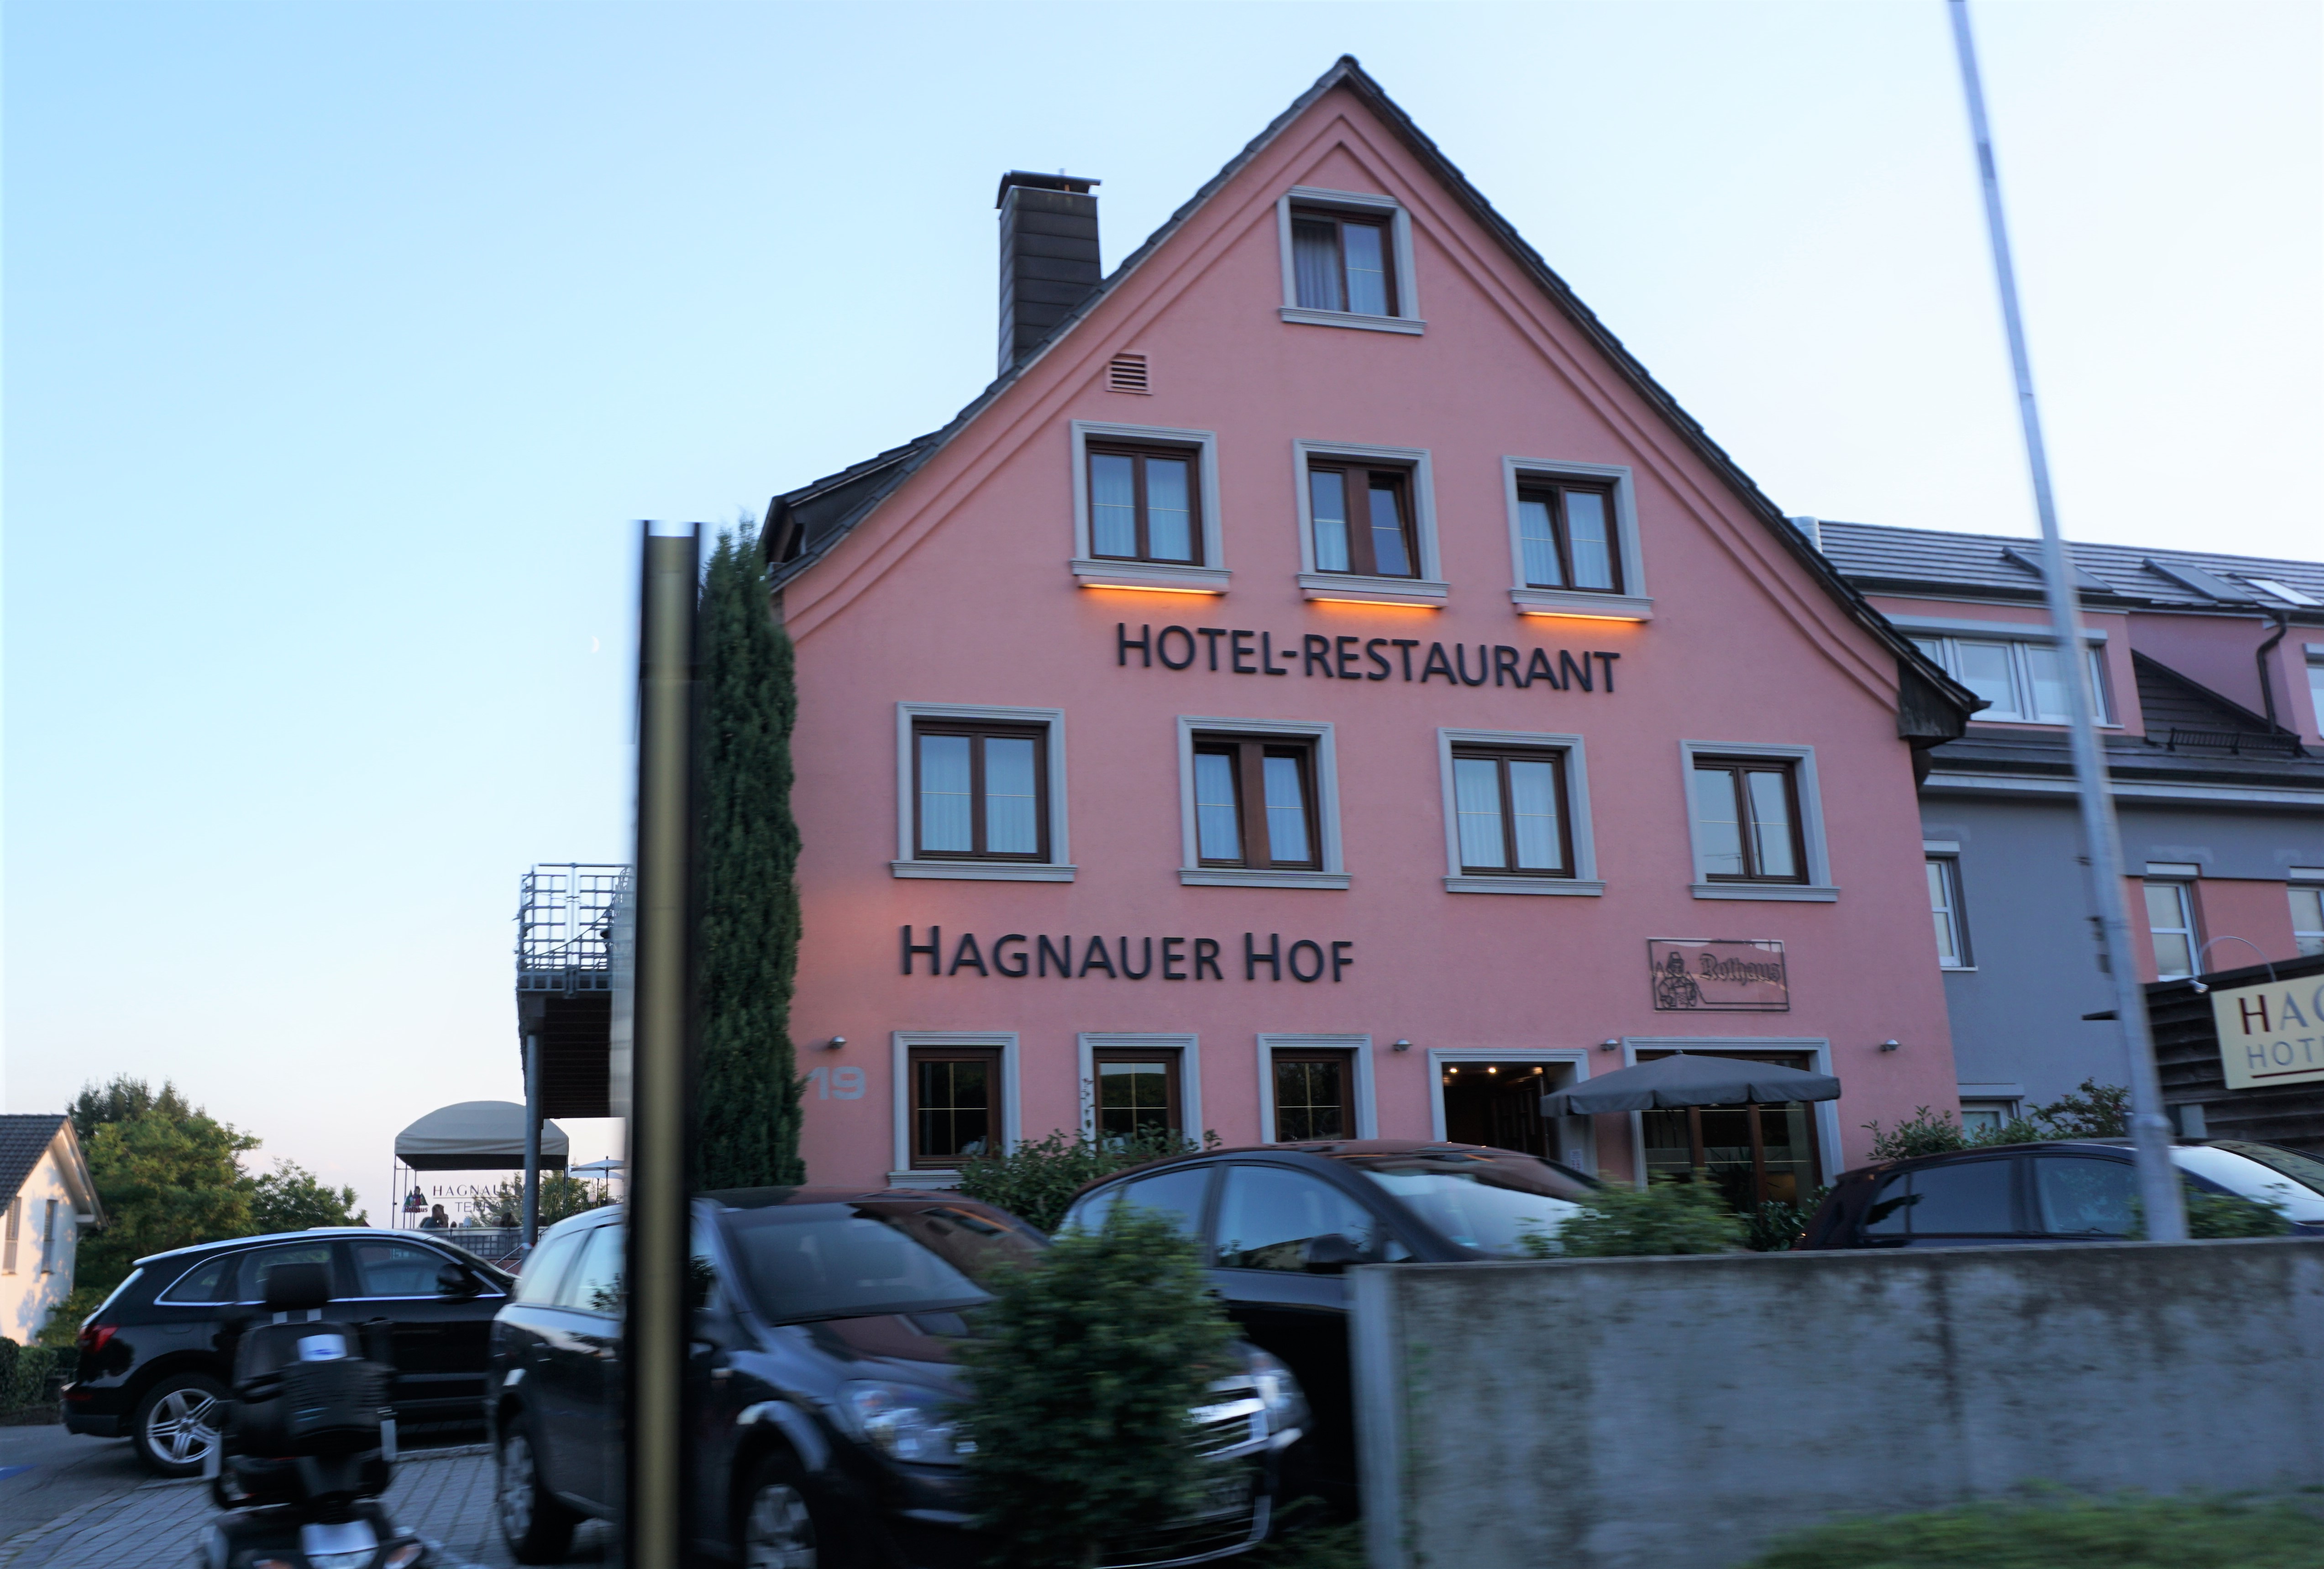 Hotel Hagnauer Hof, Hagnau.
